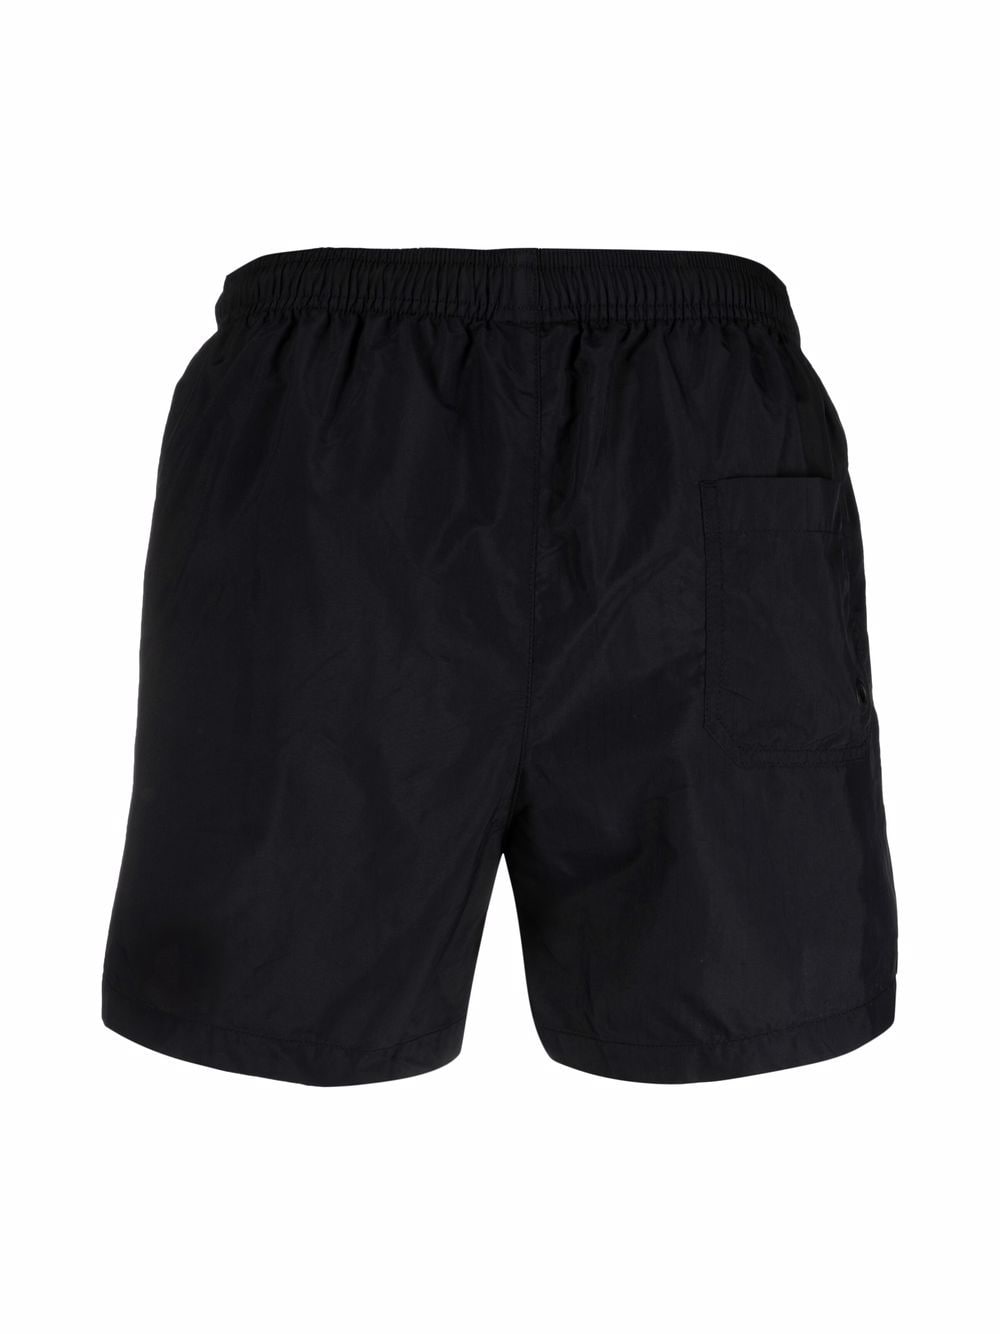 Black knee-length swimming shorts